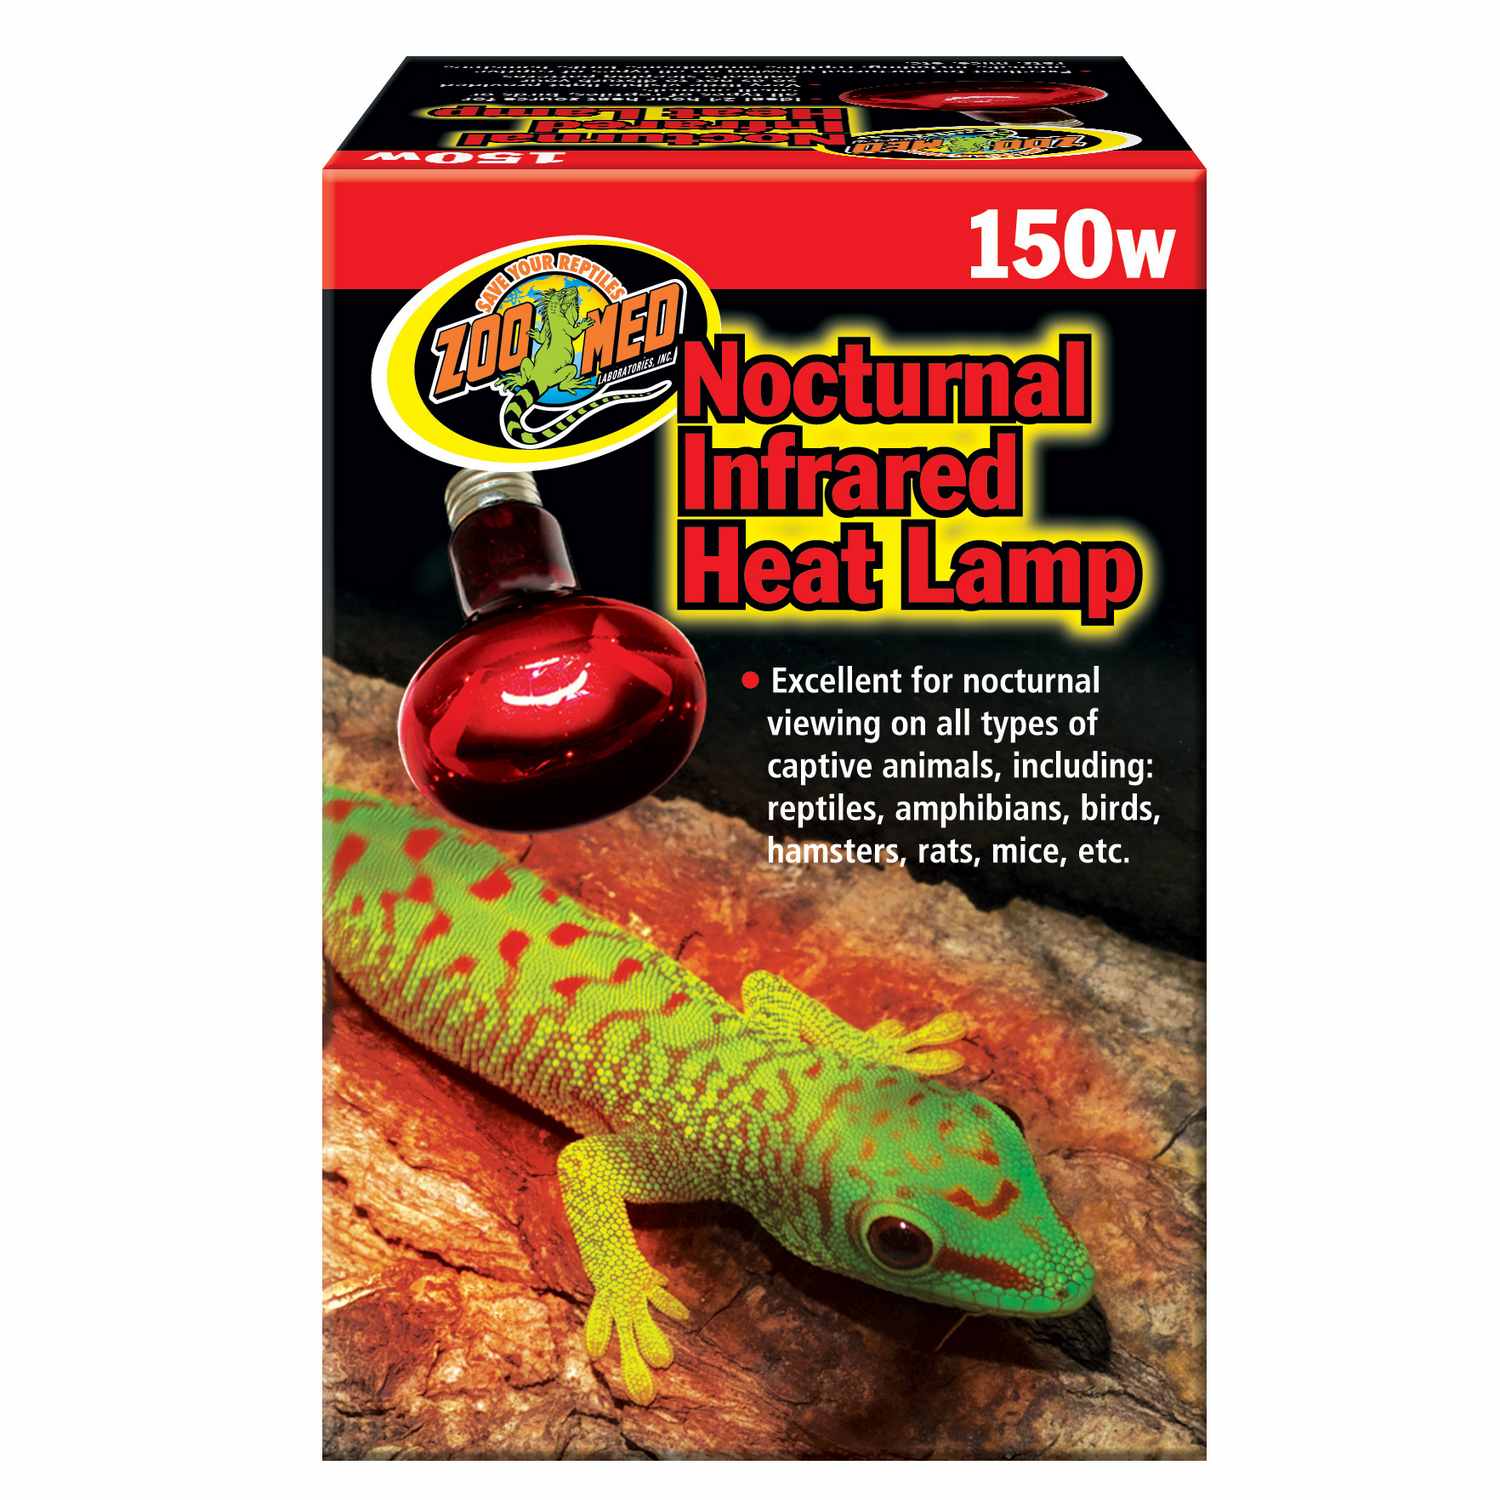 DAUERHAFT Infrared Reptile Heating Lamp,Non-toxic Warming Light Bulb,Reptile Red Light Heat Lamp,25W/50W/75W/100W,for Reptile Sleeping,E27 25W